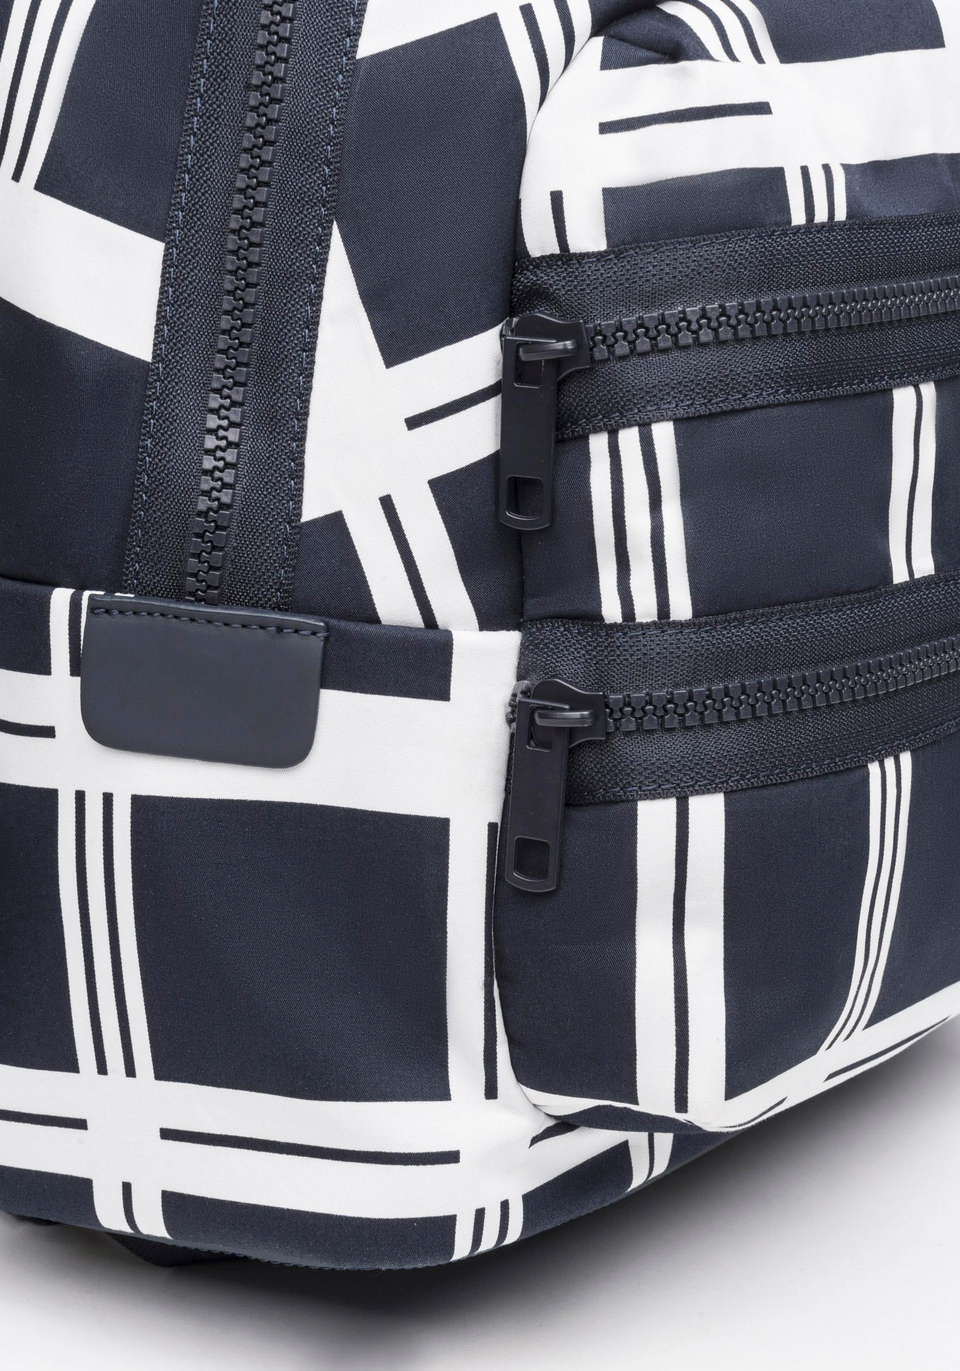 Printed fabric backpack - Antony Morato Online Shop